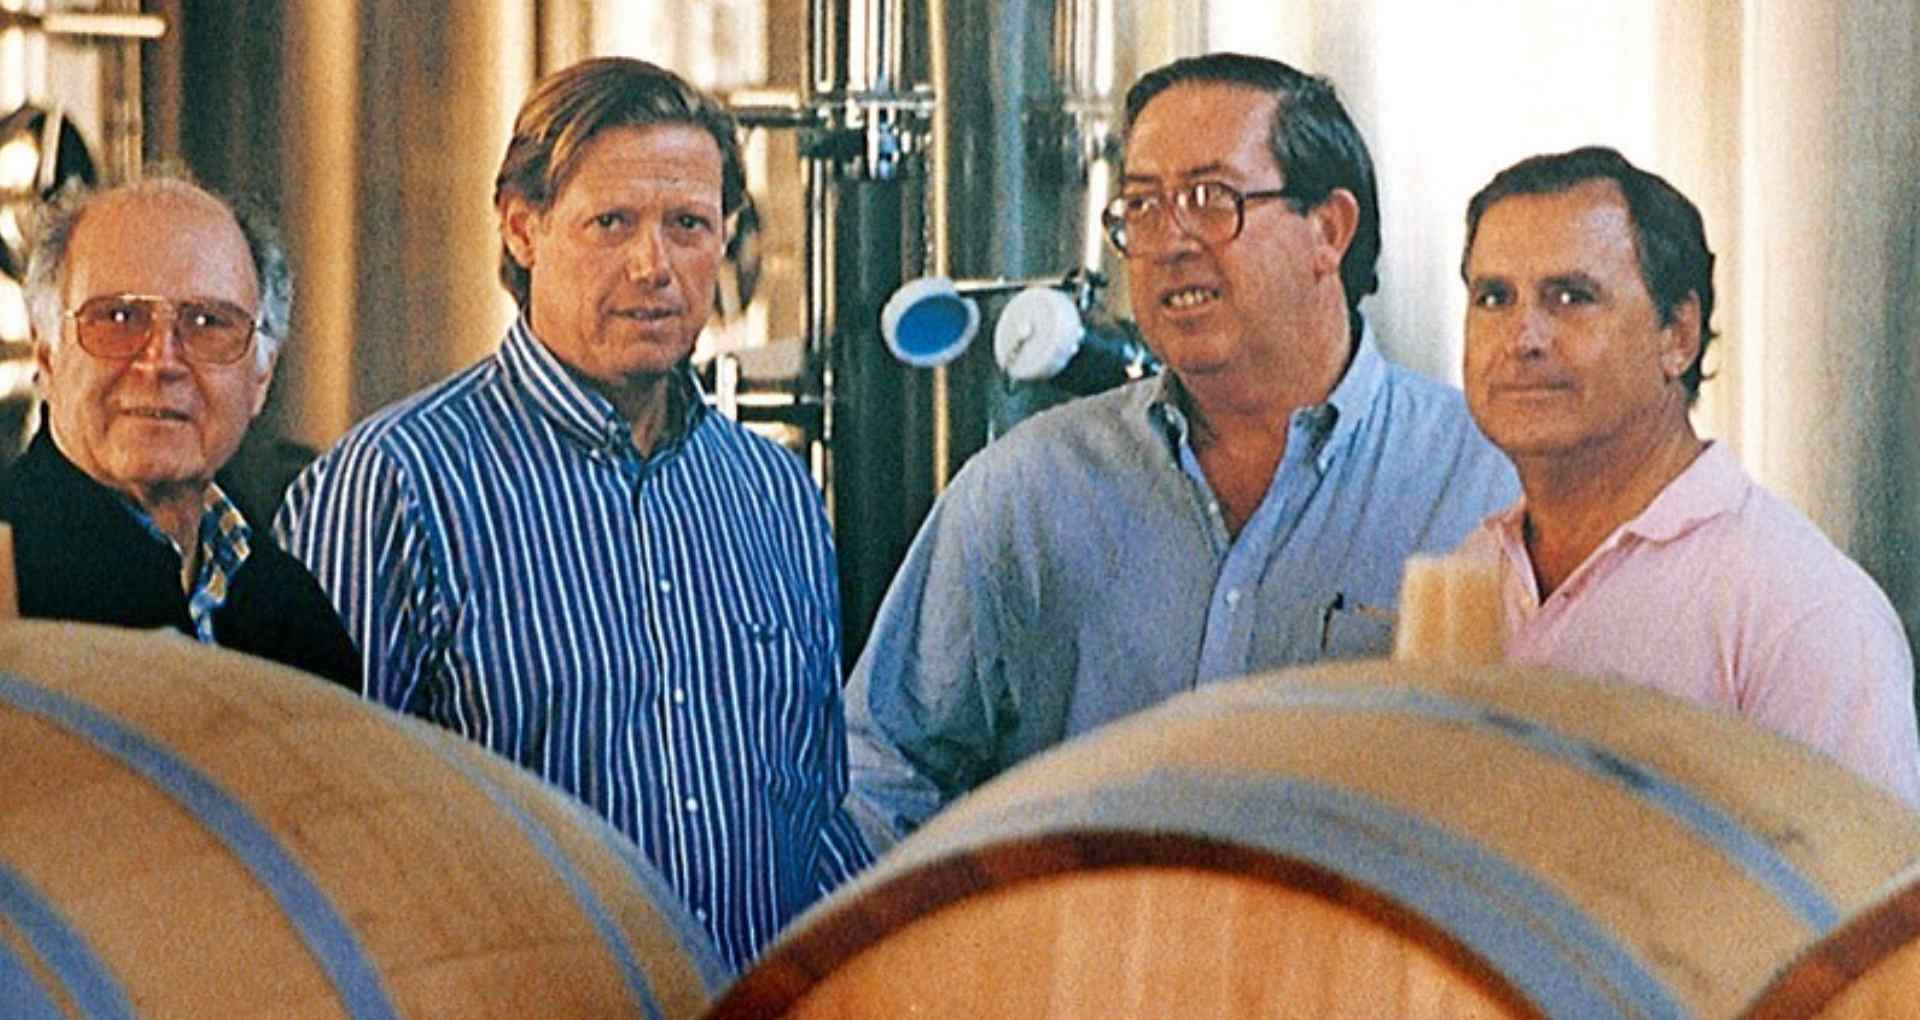 Montes Wines’ founders